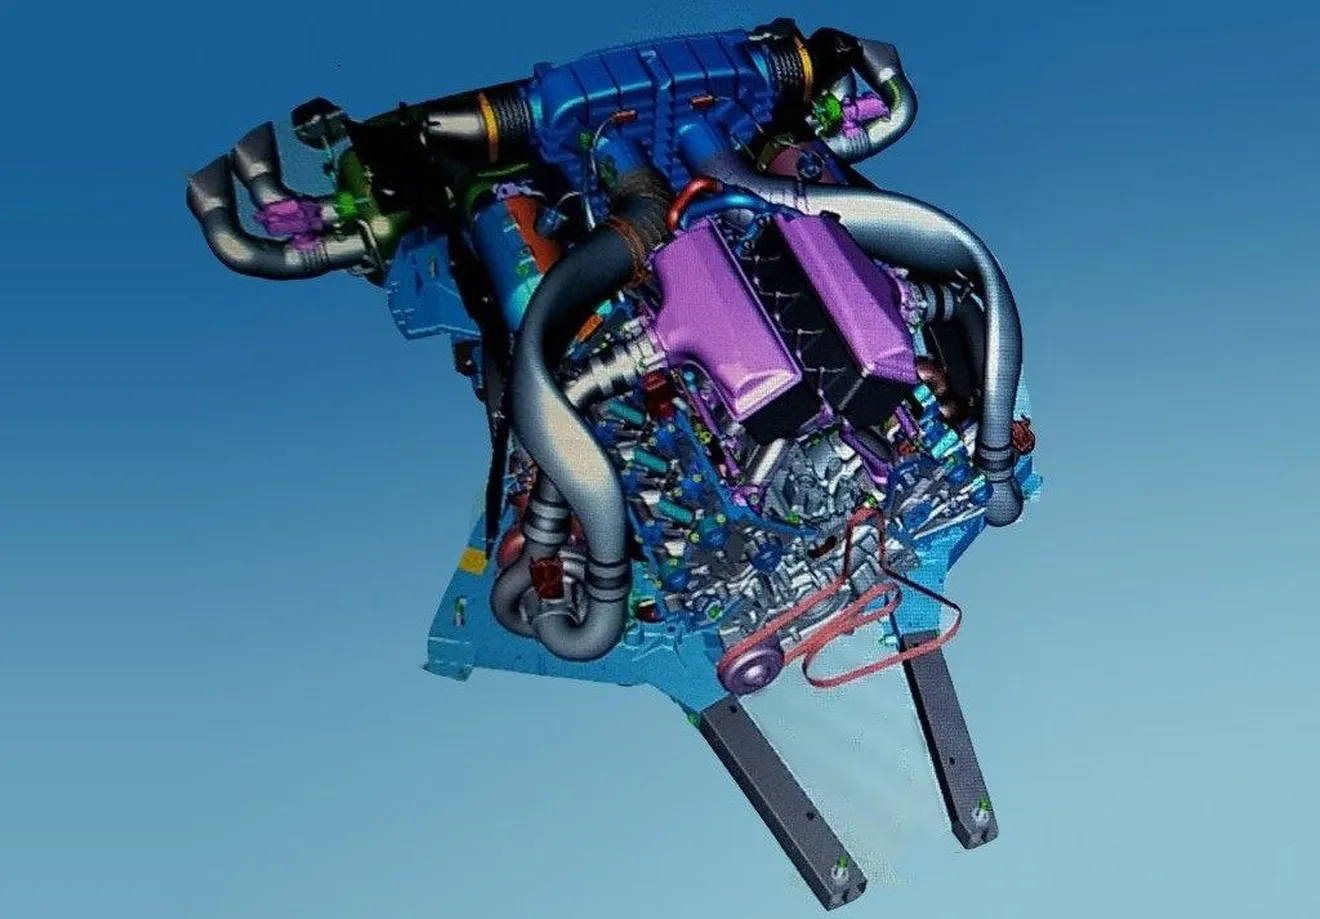 Filtrado nuevo motor V8 LT7 de doble turbo del futuro Corvette C8